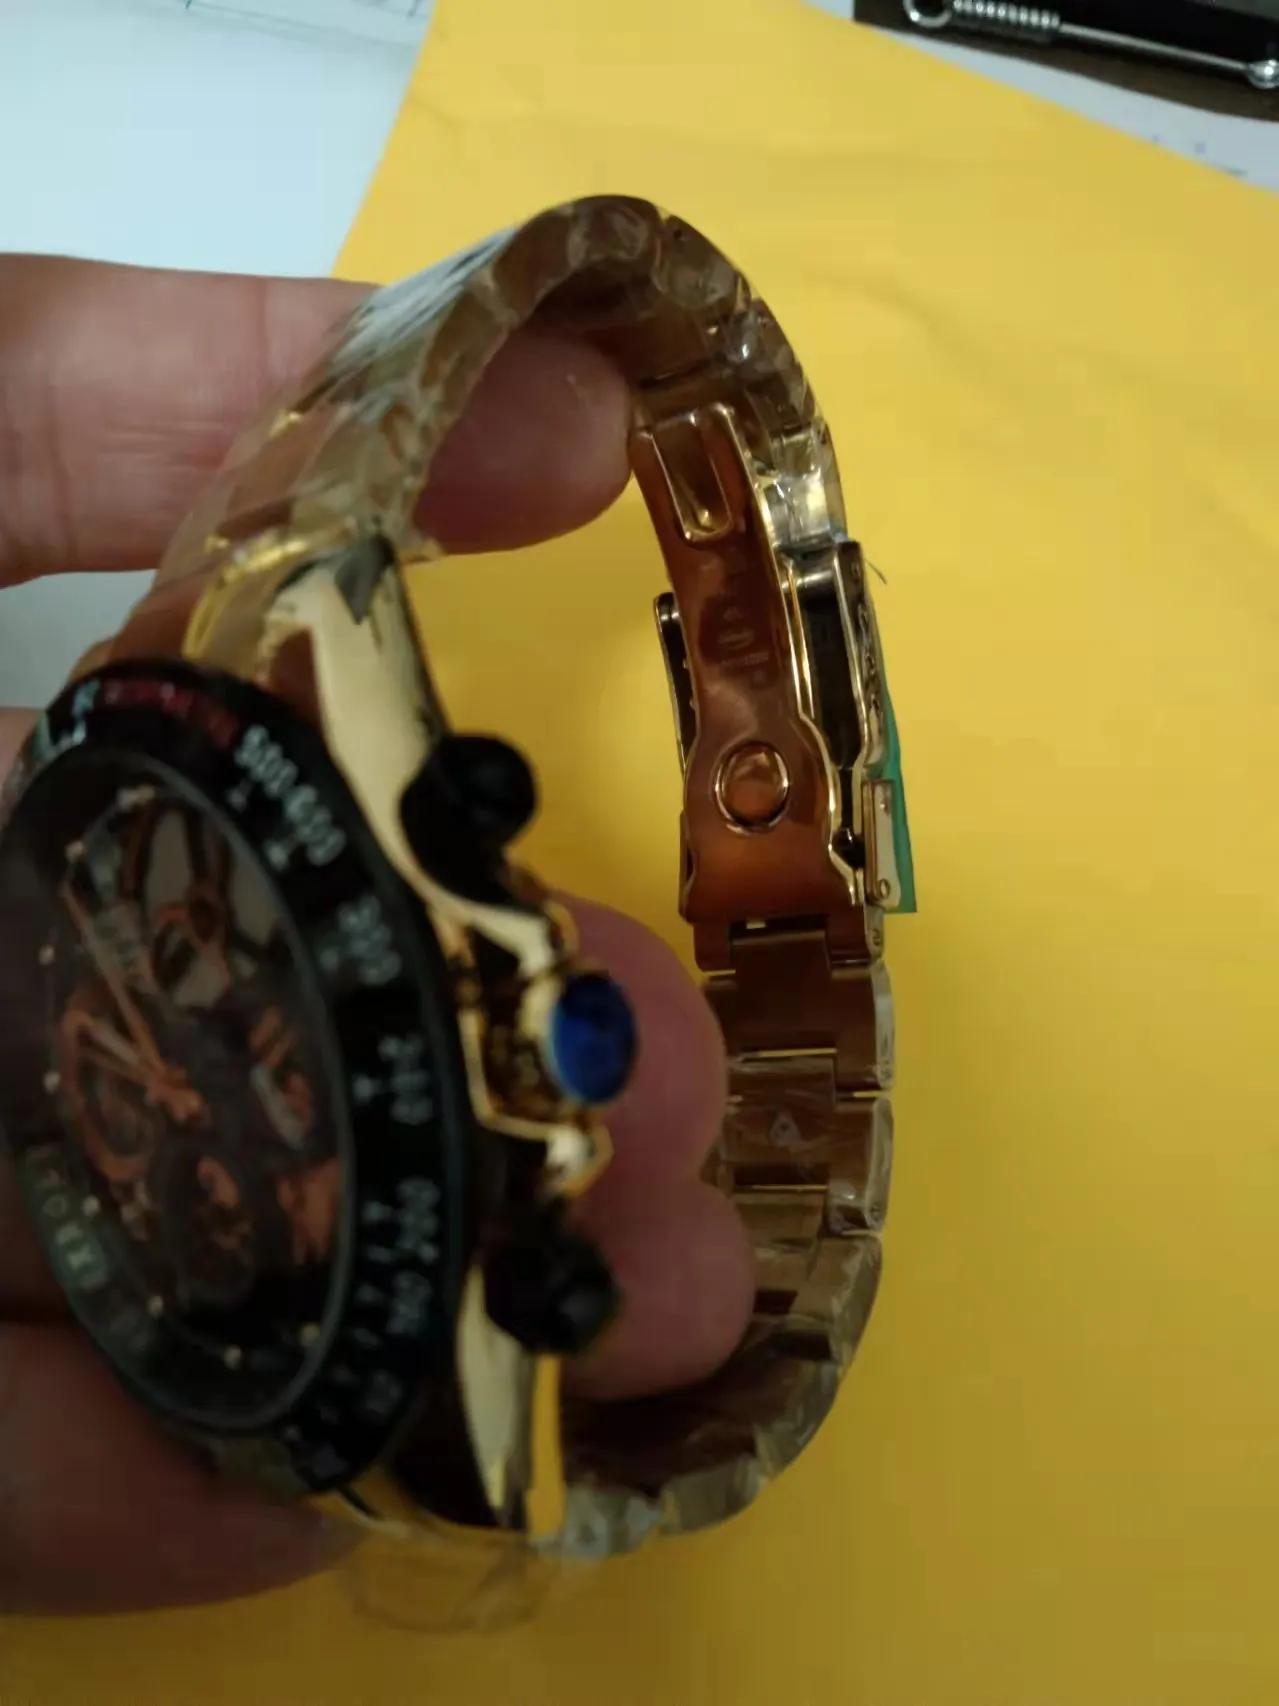 2022 Luxury Men's Watch 42mm Quartz Multifunction Classic Watch Fashion Work i flera tidszoner Guldklockor Designer Oro254K